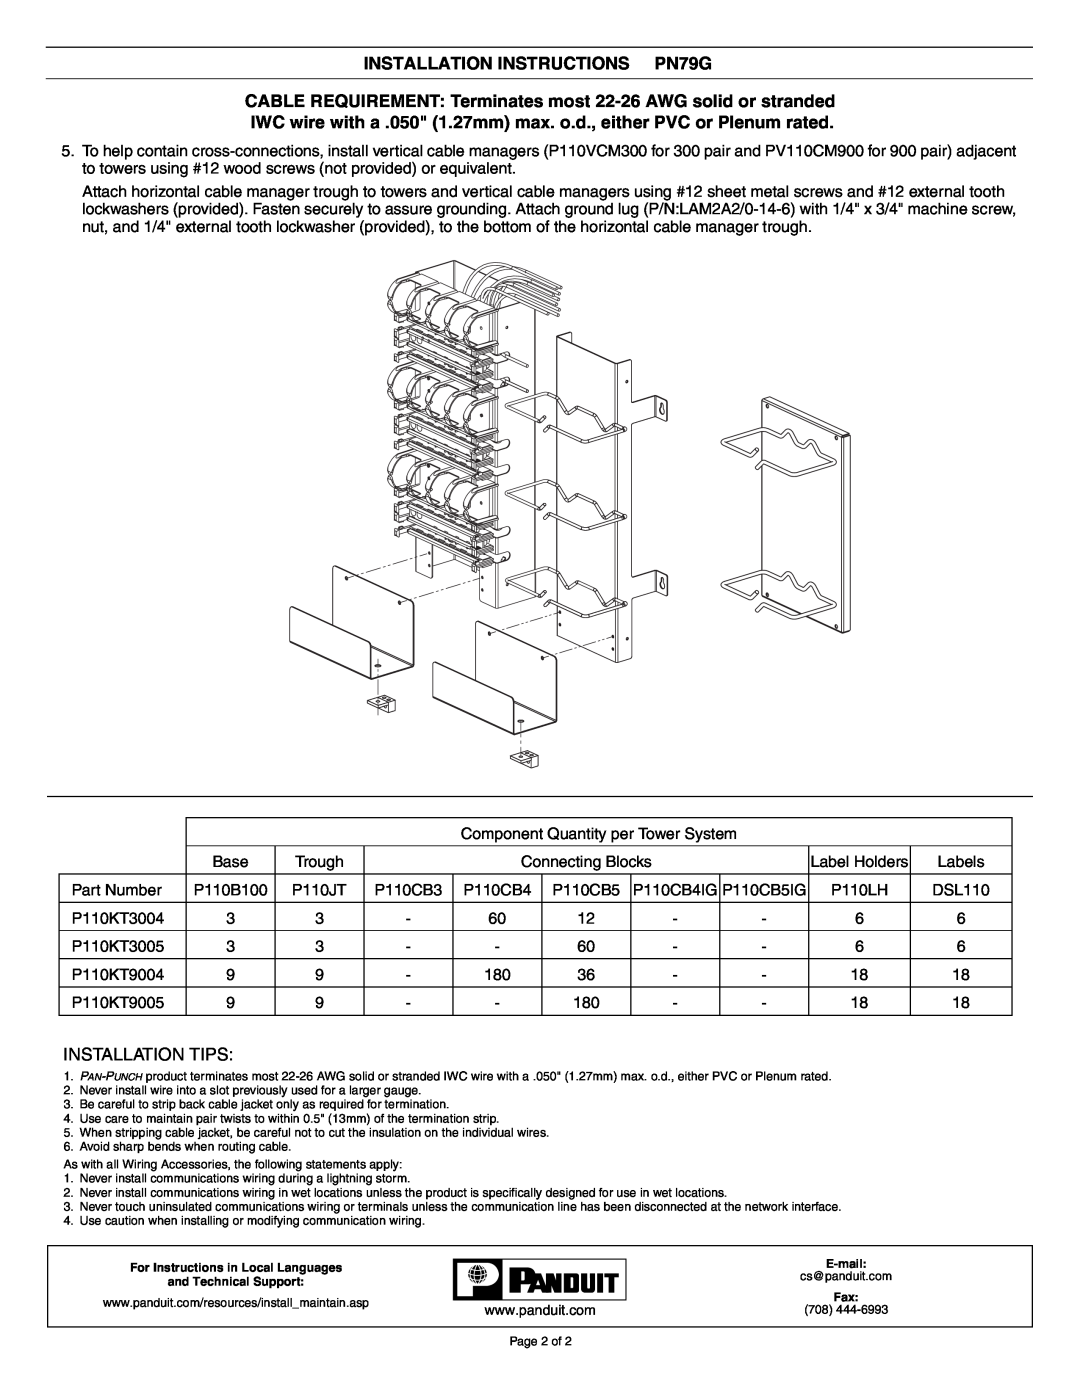 Panduit installation instructions Installation Tips, INSTALLATION INSTRUCTIONS PN79G 